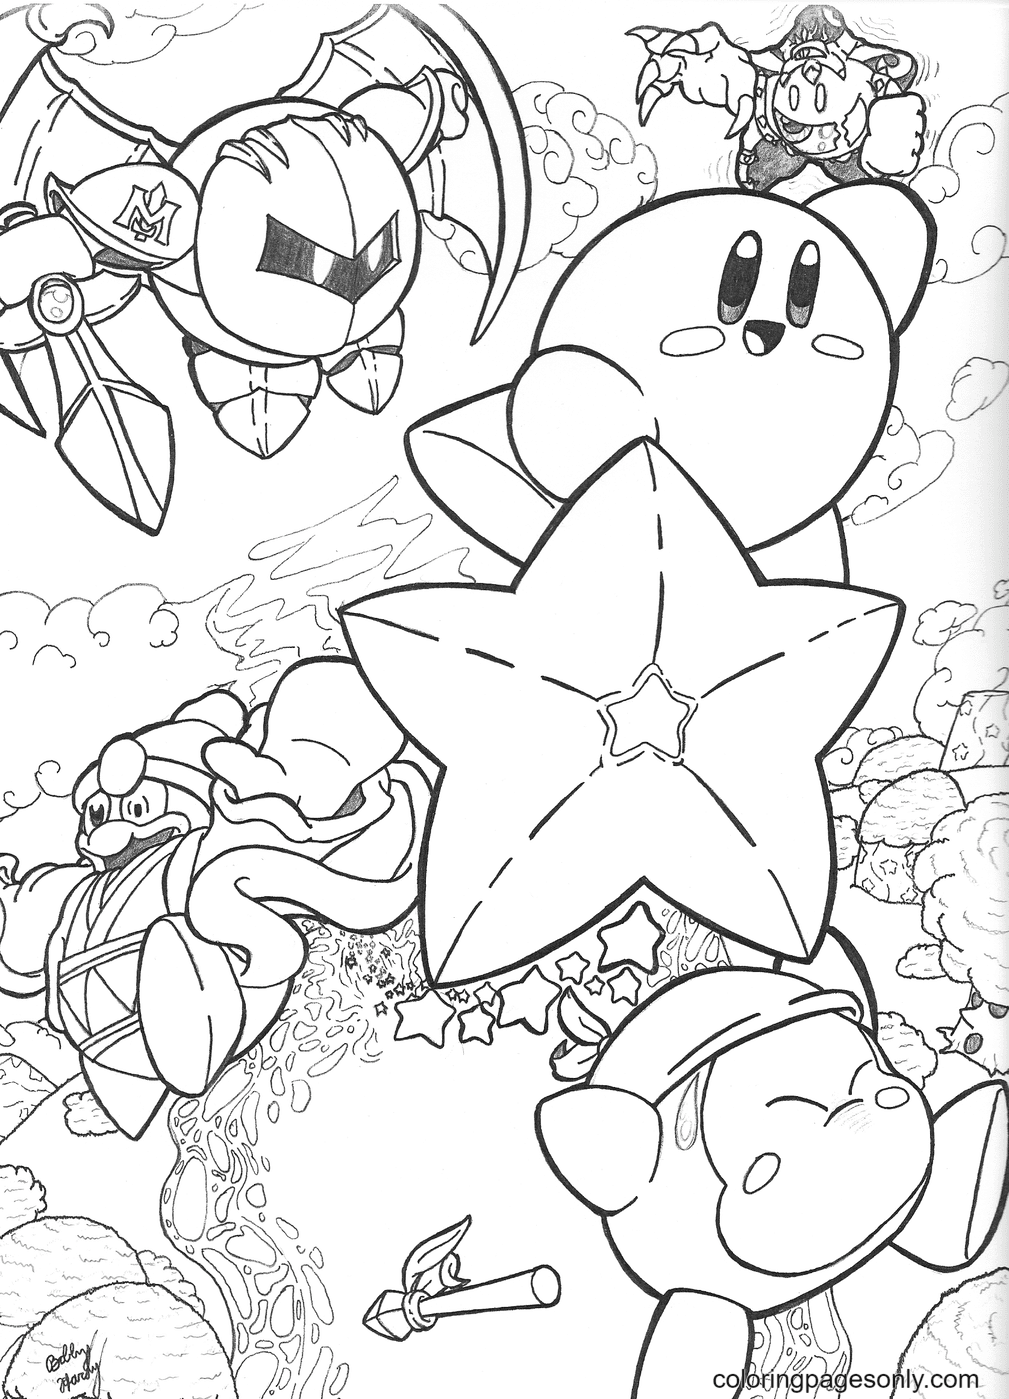 Kirby, tapferer Krieger aus Kirby